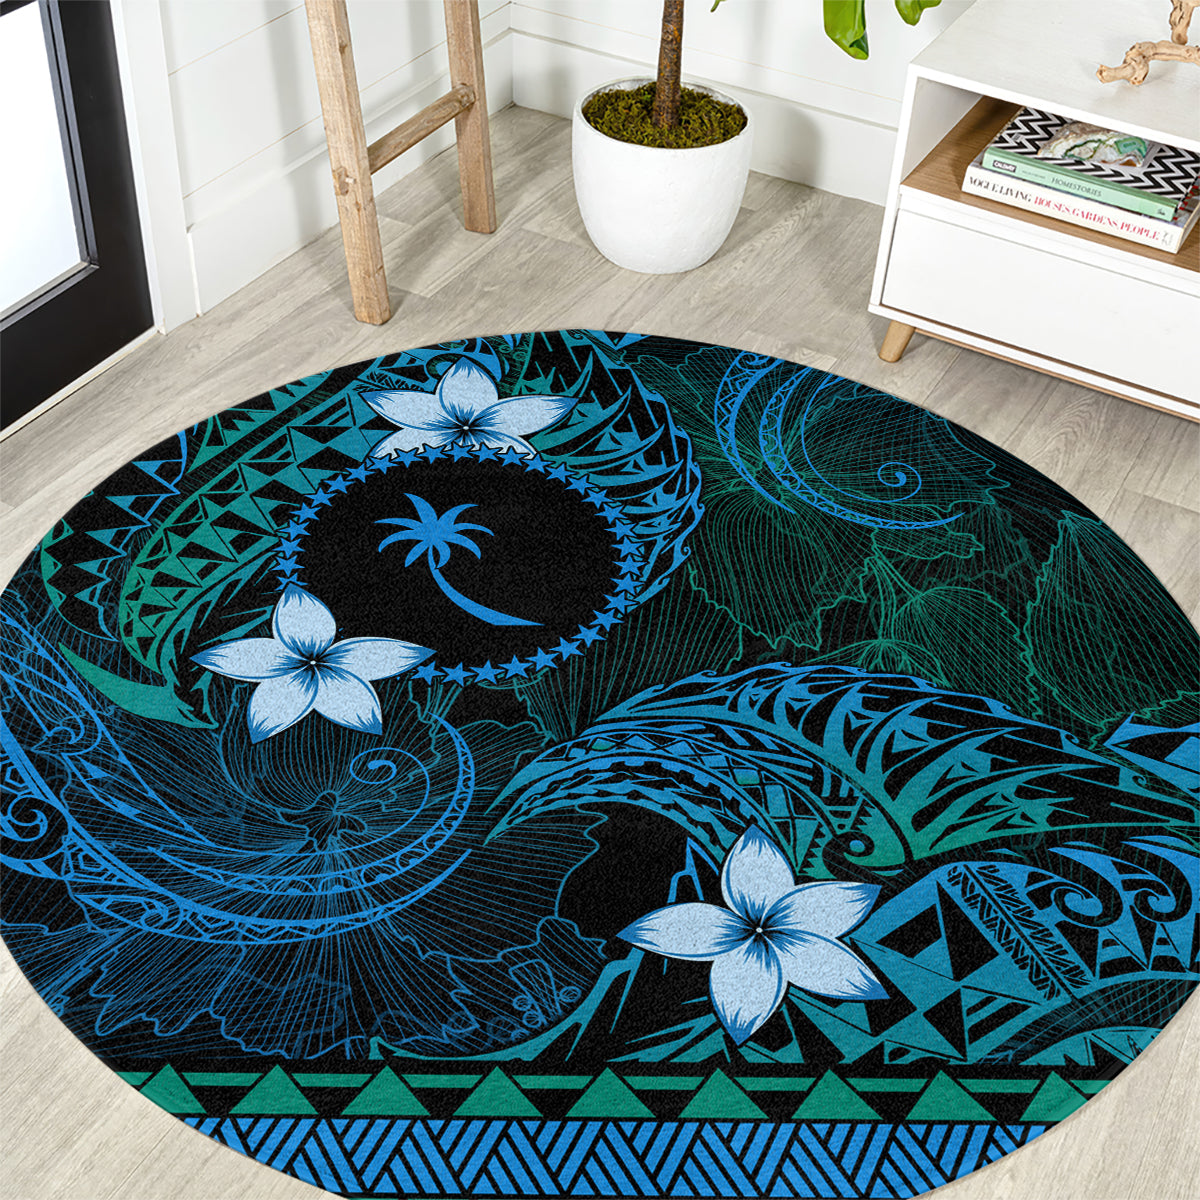 FSM Chuuk State Round Carpet Tribal Pattern Ocean Version